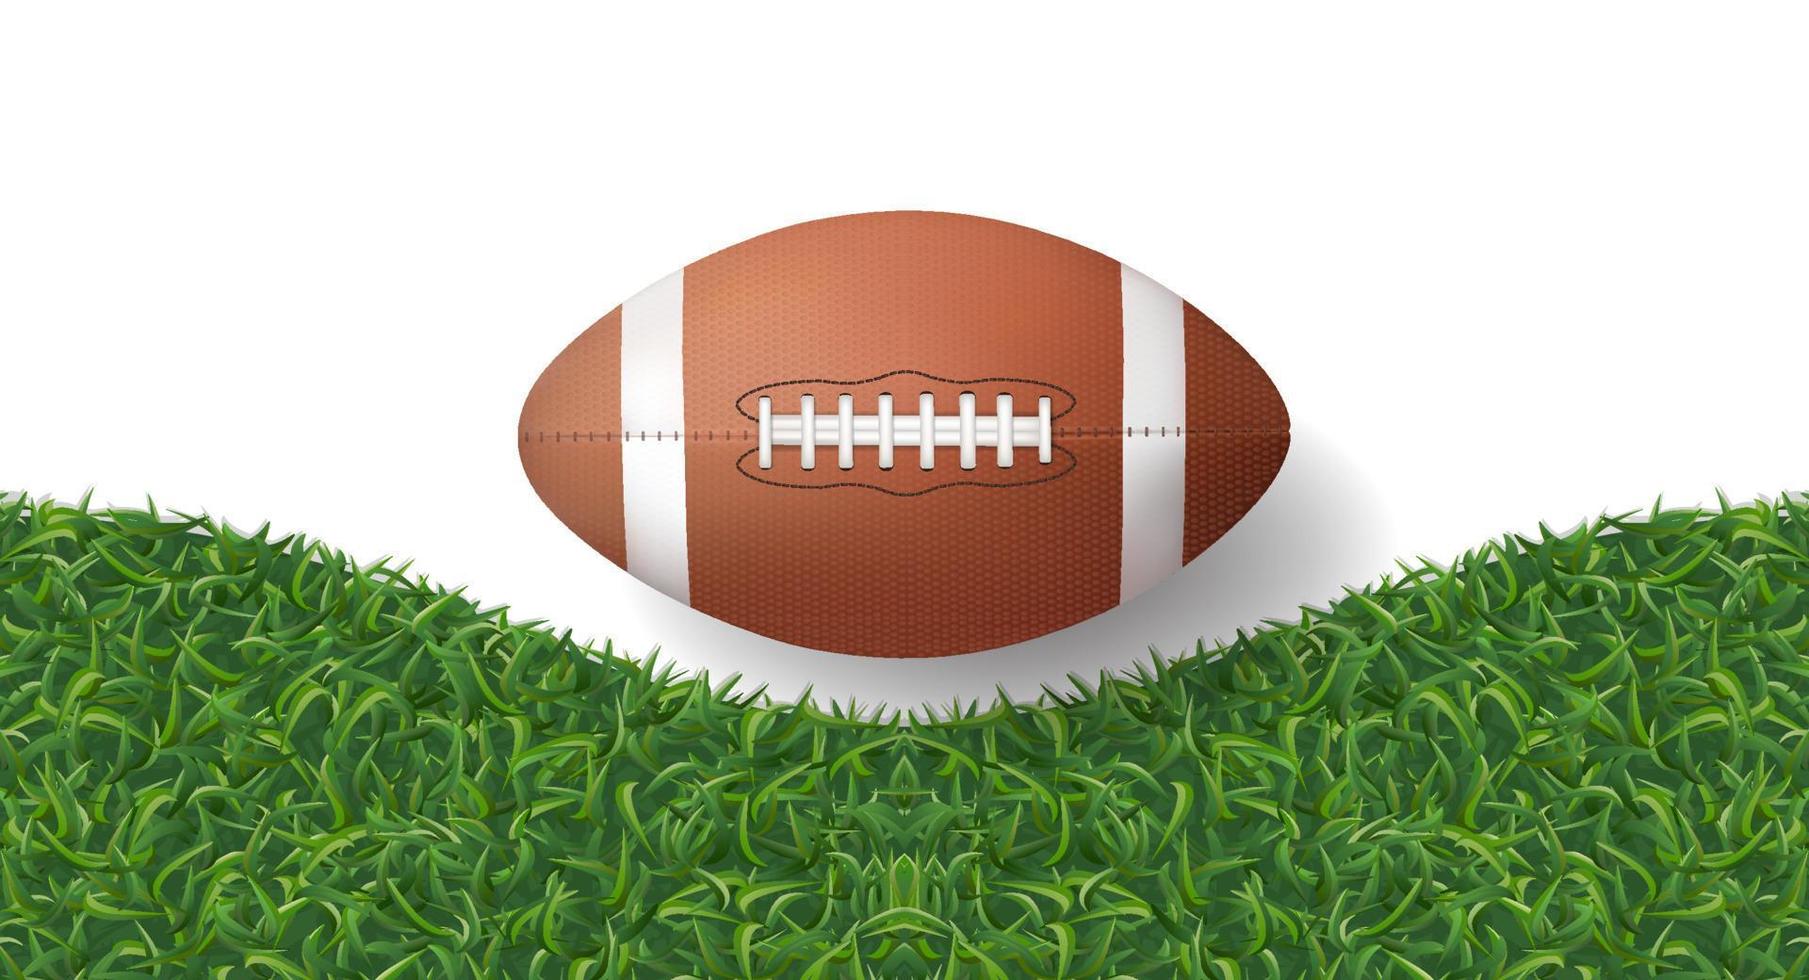 ballon de football américain avec fond de texture d'herbe verte. vecteur. vecteur